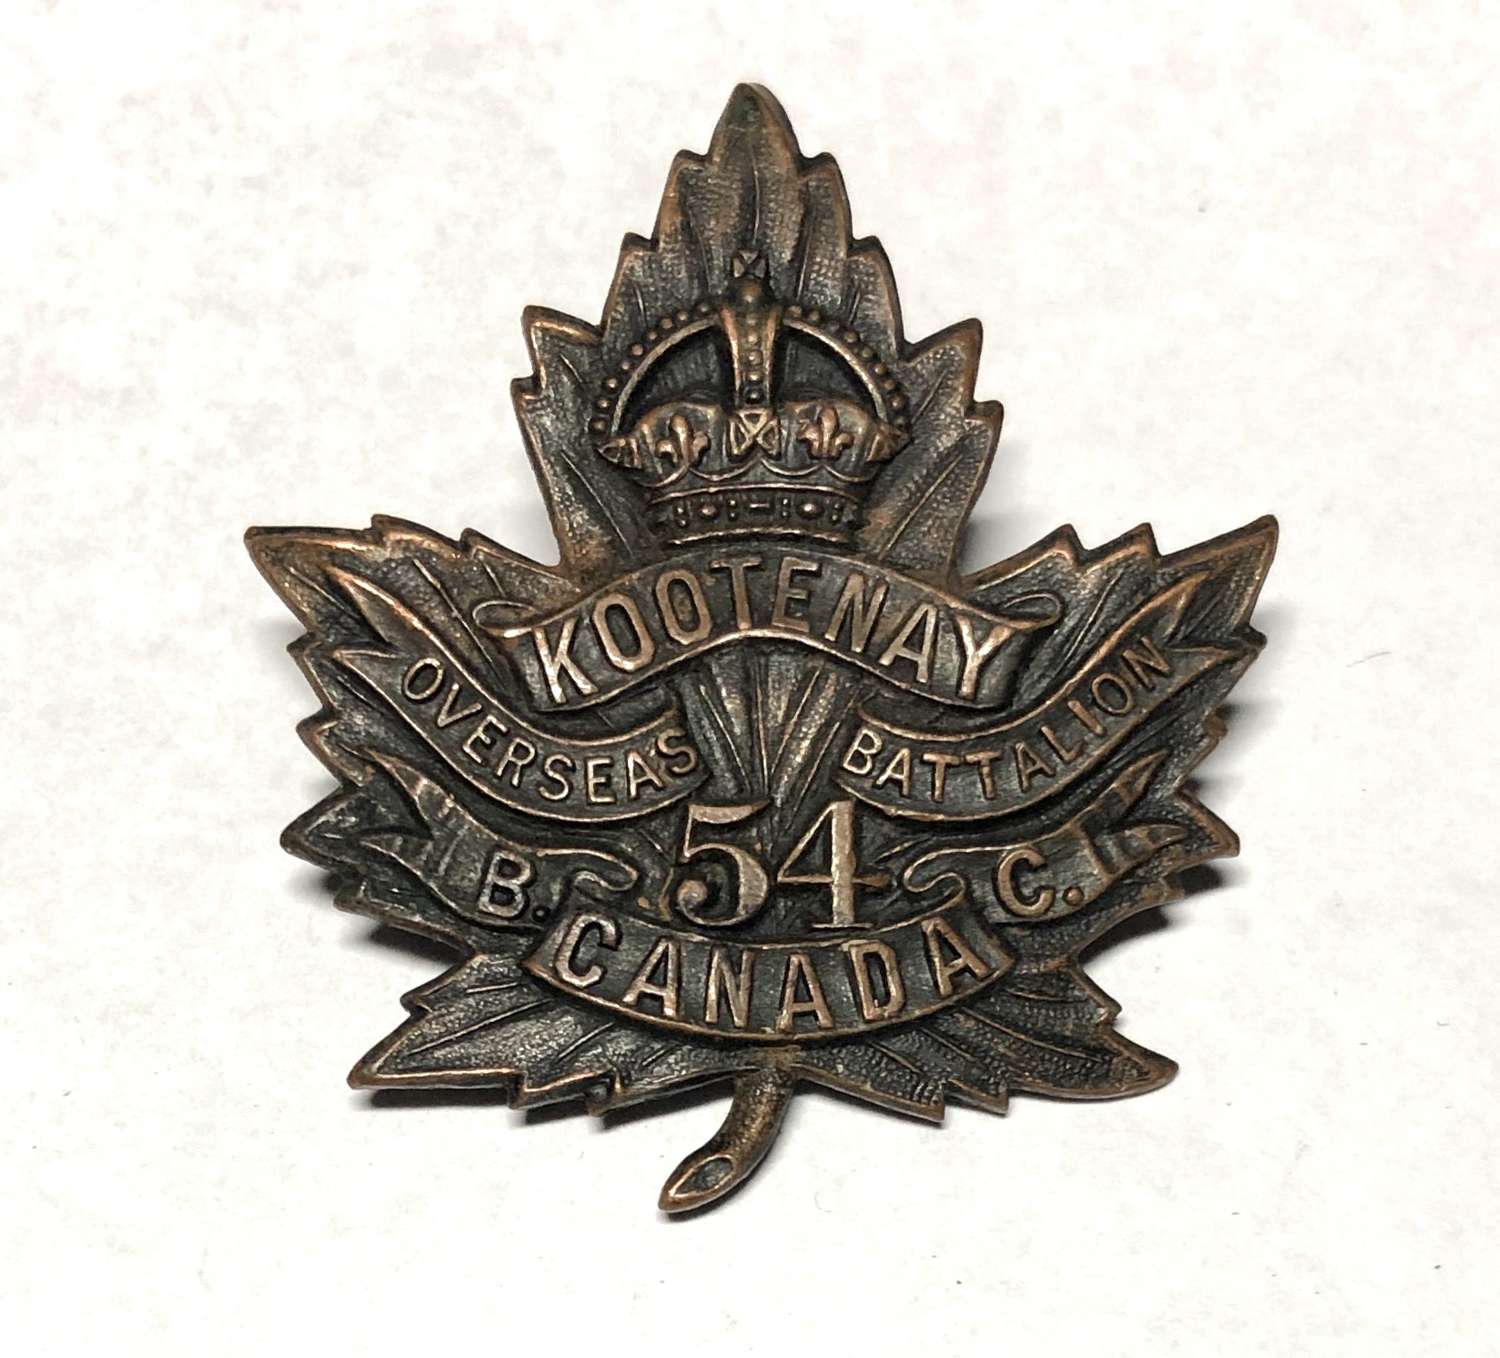 Canada 54th Battalion (Kootenay, B.C.) CEF WW1 cap badge by Jacoby